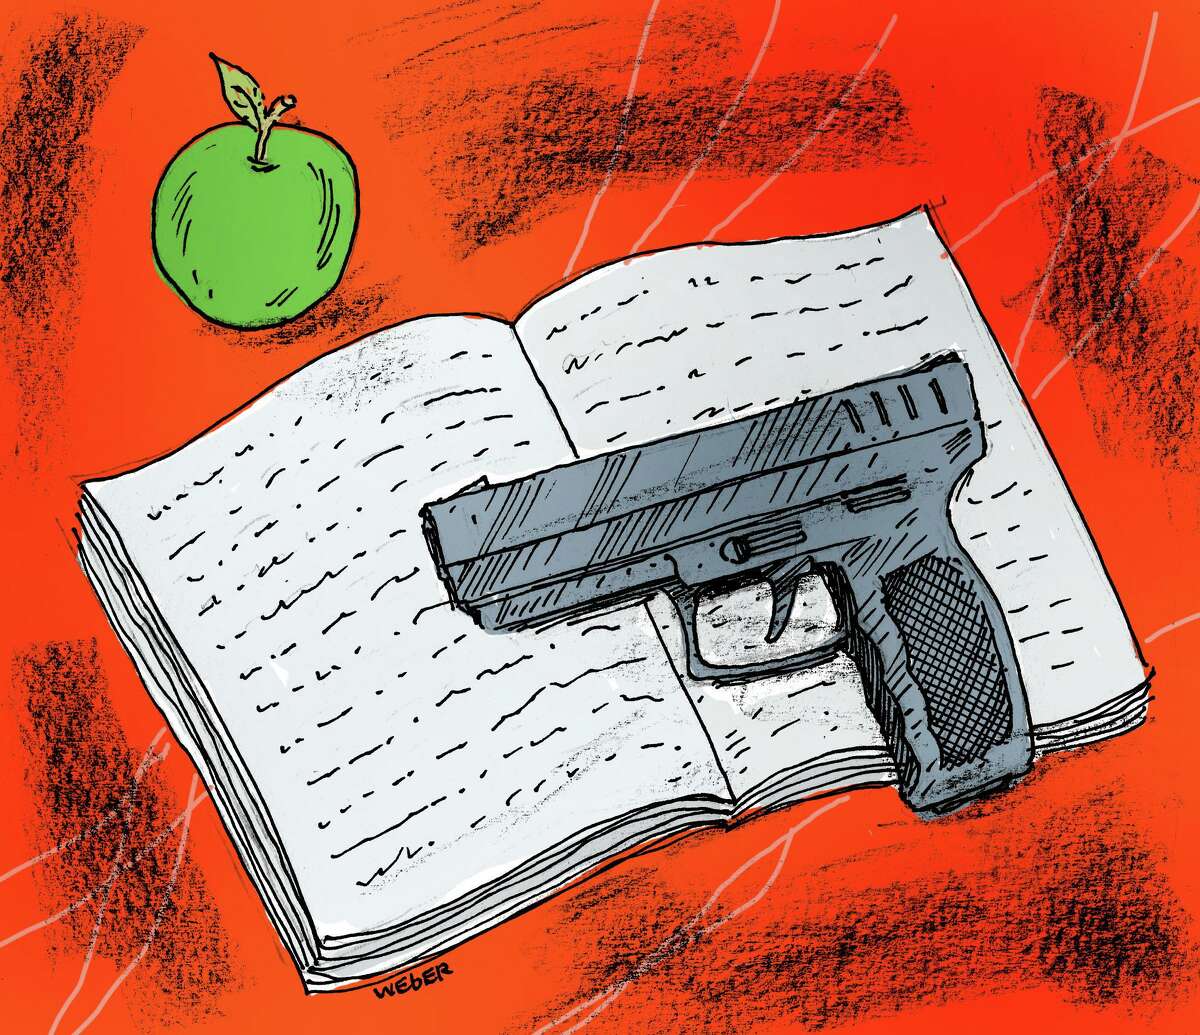 Illustration about teachers using guns.